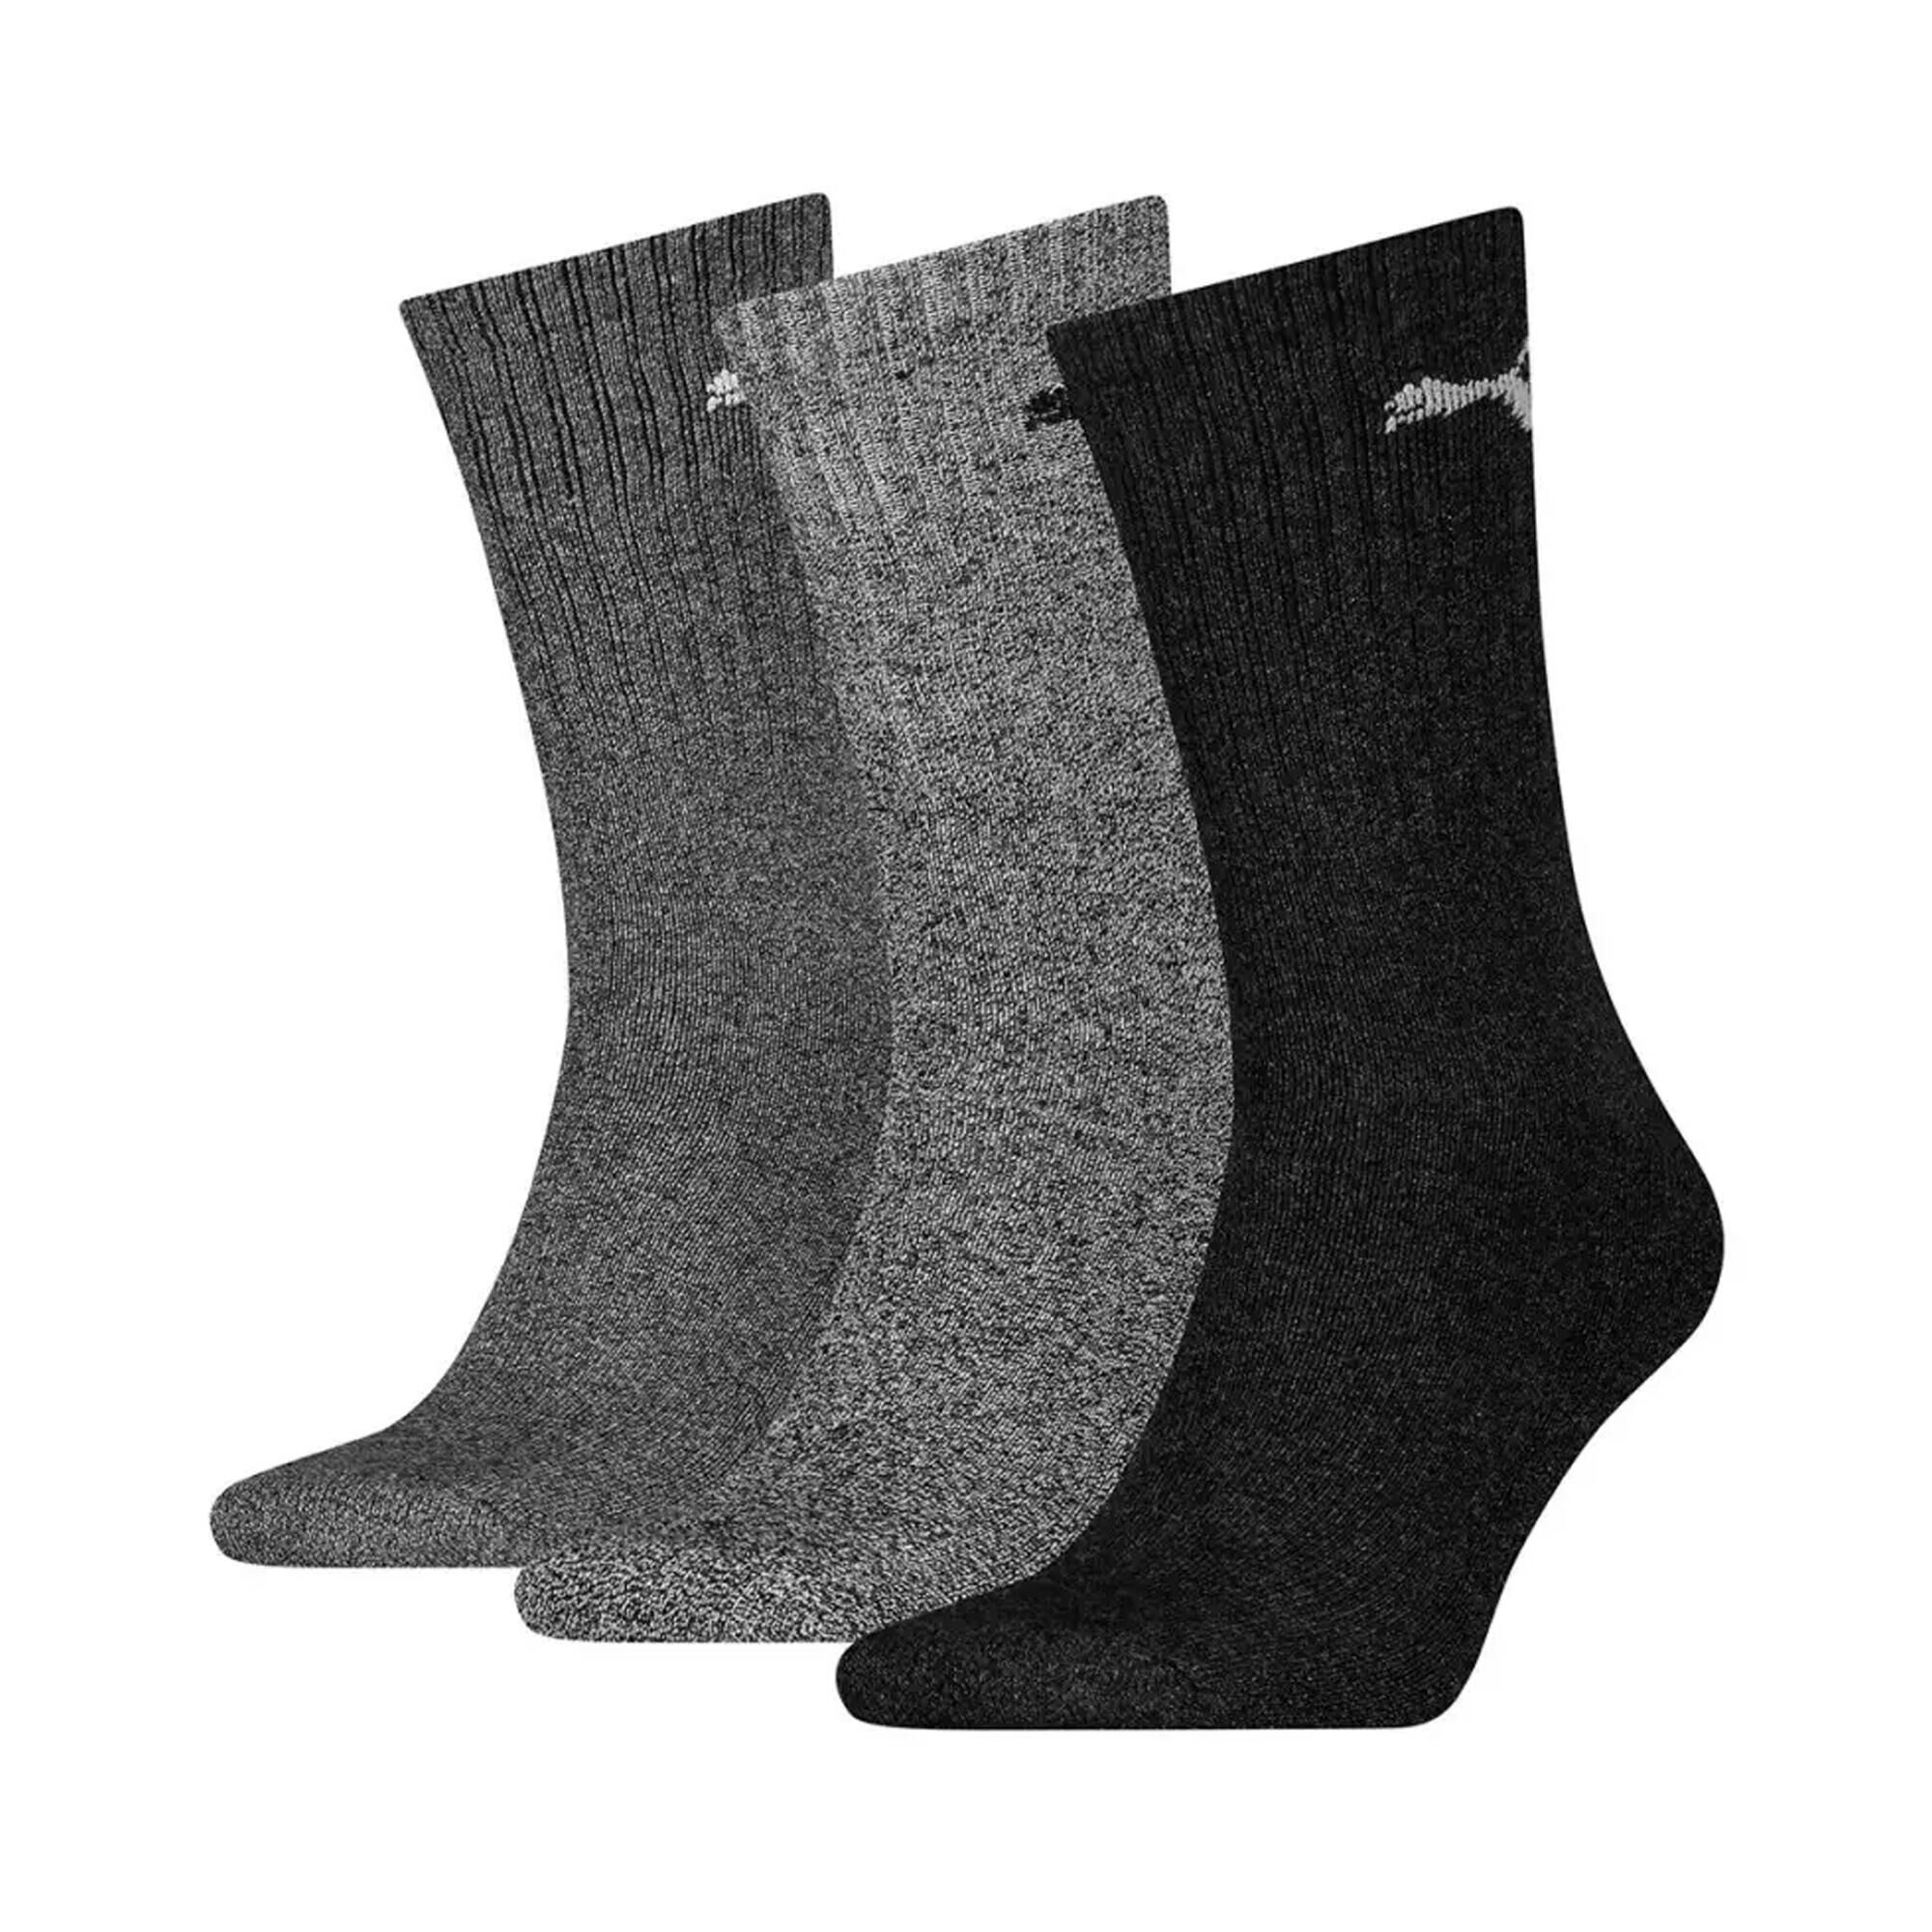 PUMA Unisex Adult Crew Sports Socks (Pack of 3) (Grey)